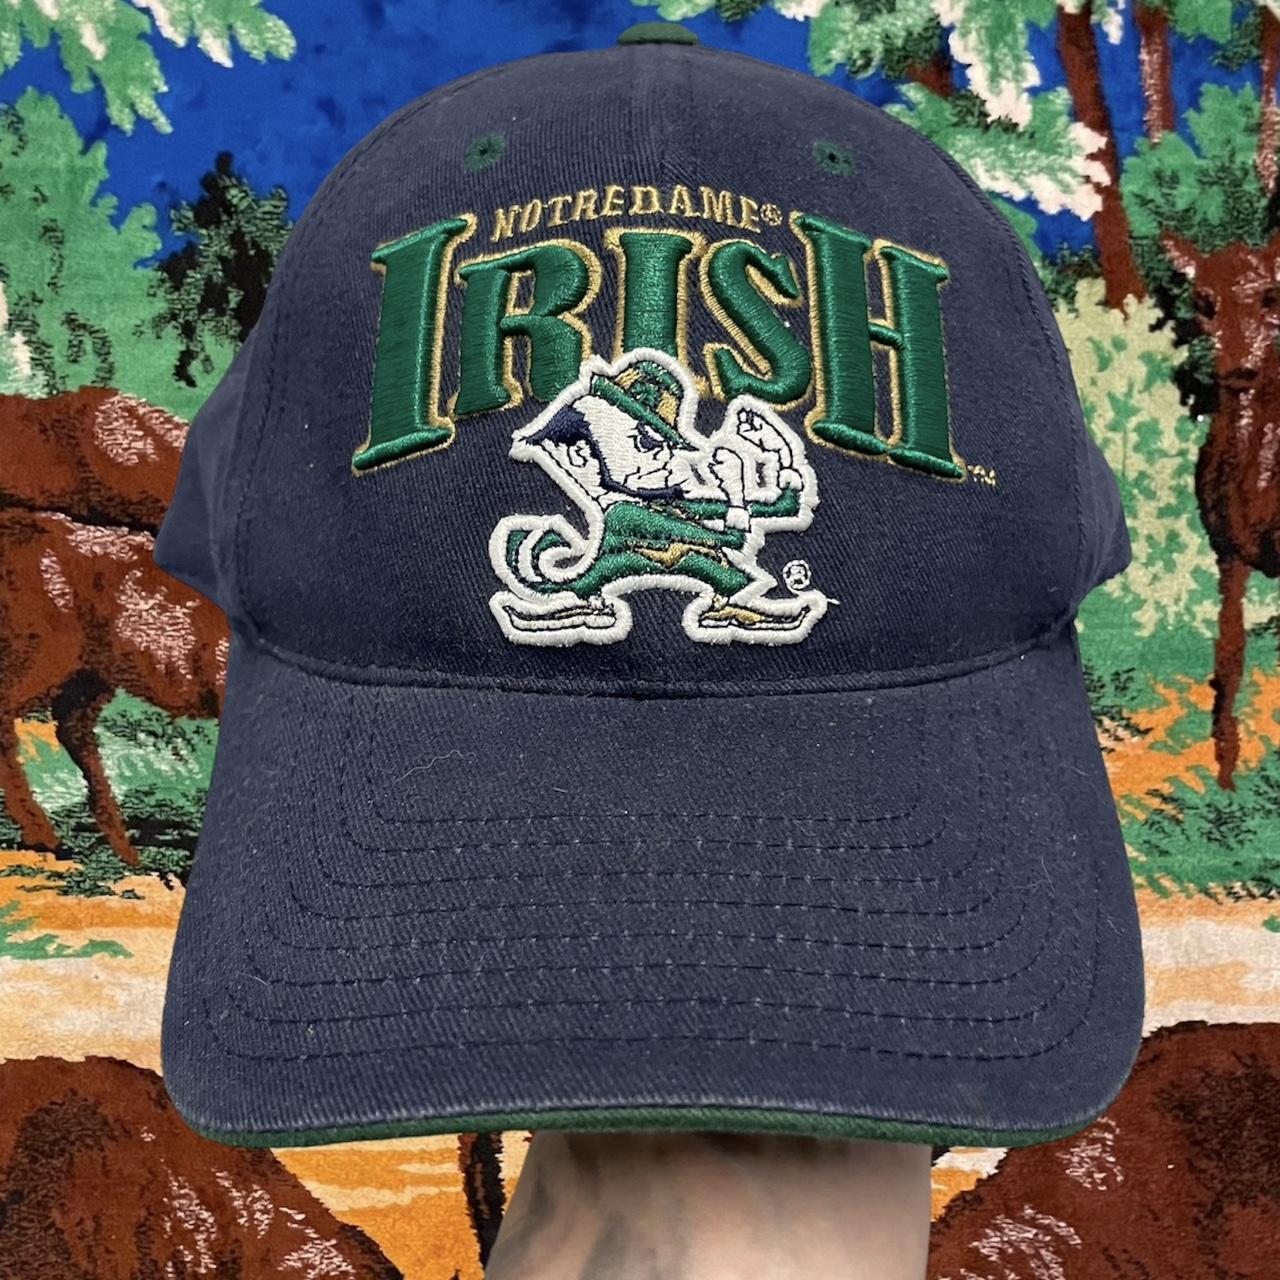 Notre Dame Fighting Irish baseball - Depop